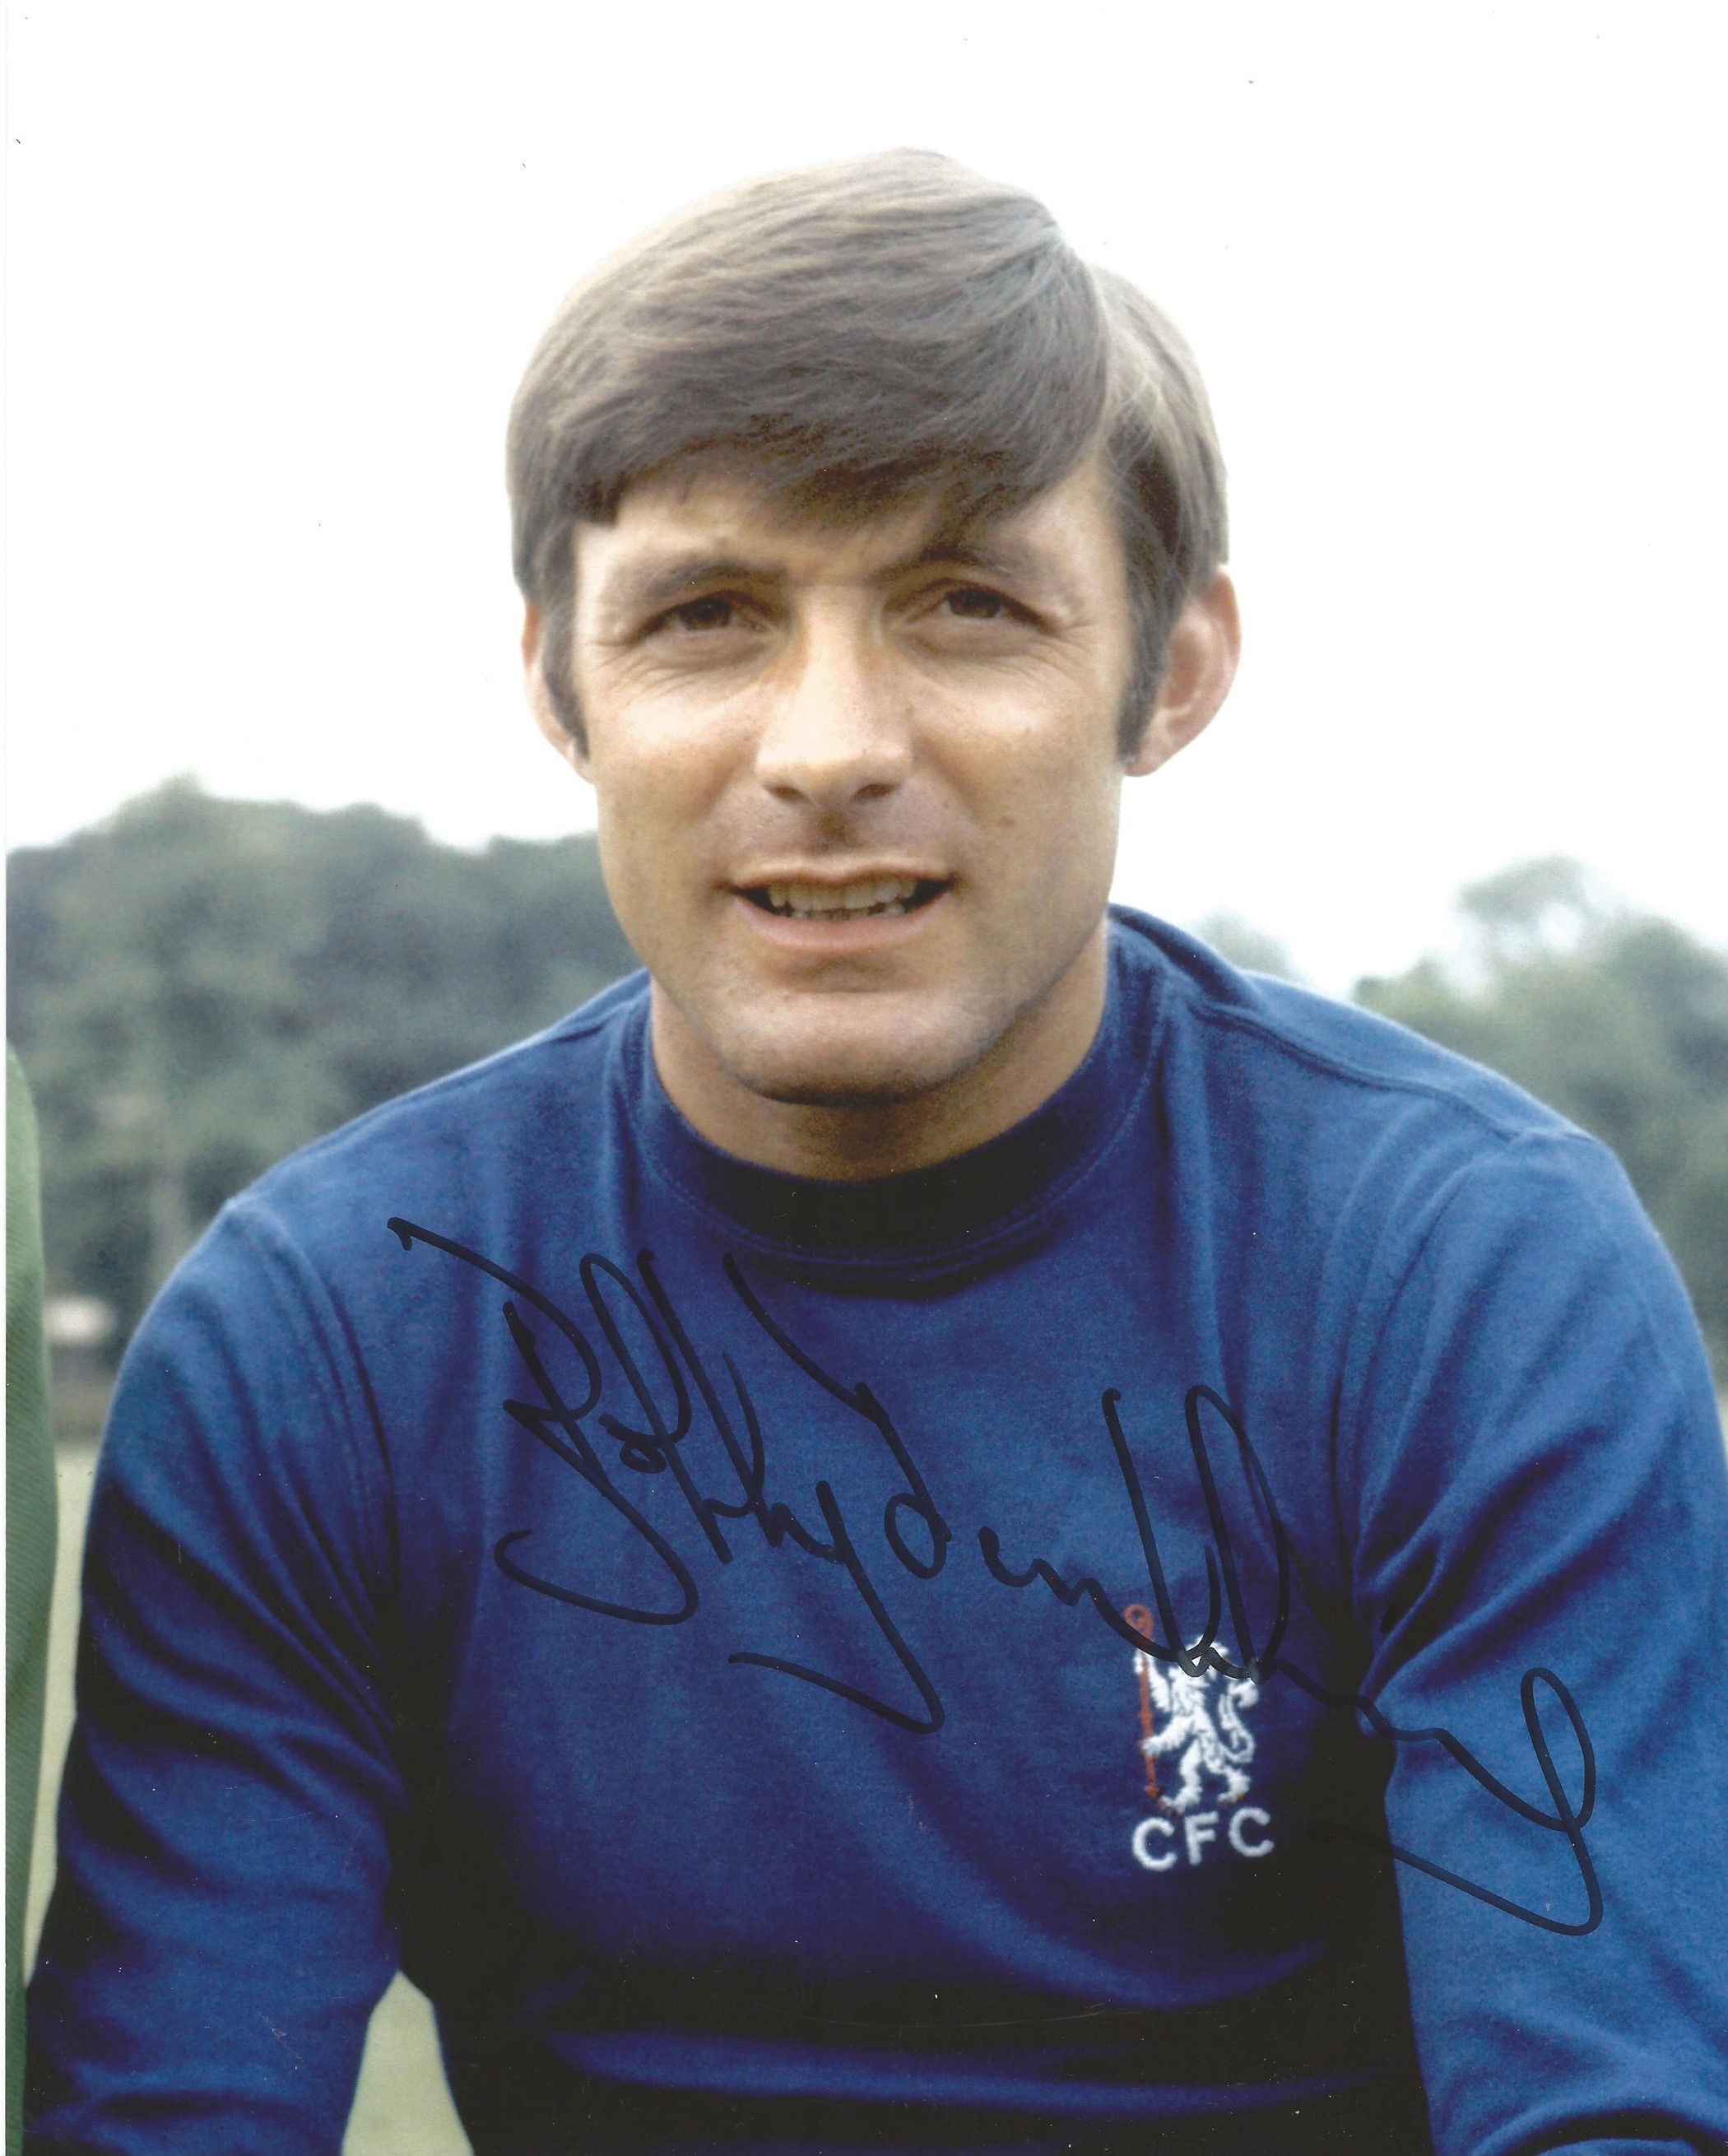 Football Robert Victor Tambling (born 18 September 1941) is an English former professional